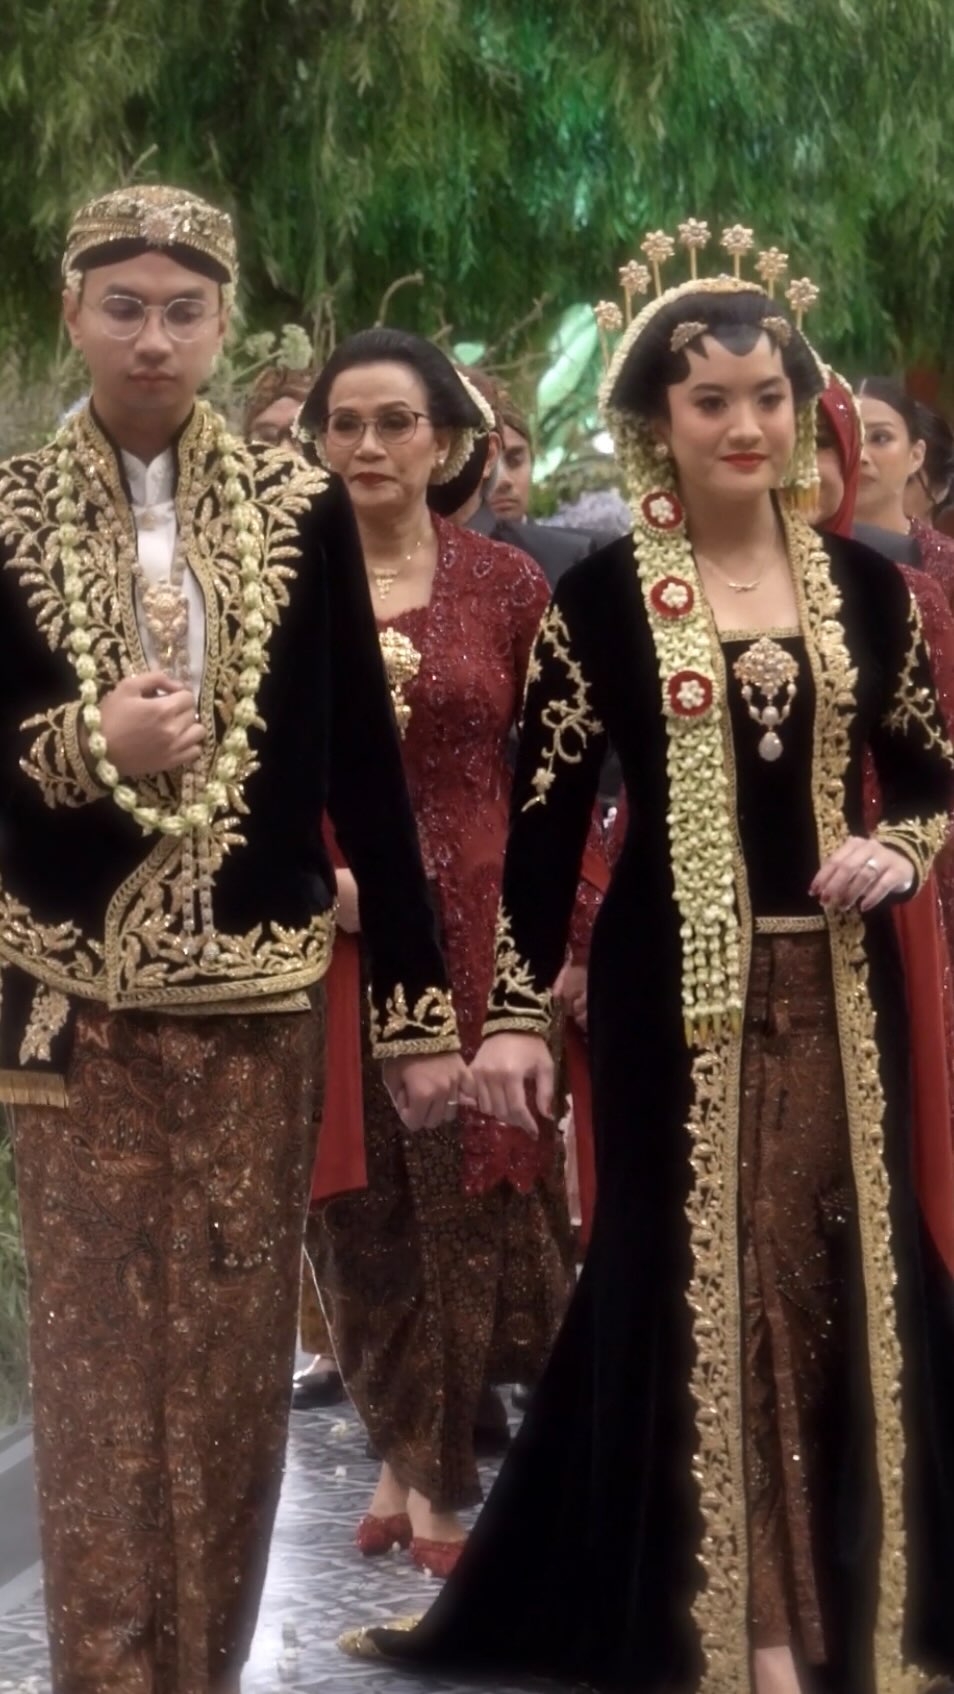 11 Momen pernikahan putra bungsu Sri Mulyani, Jokowi sebagai saksi